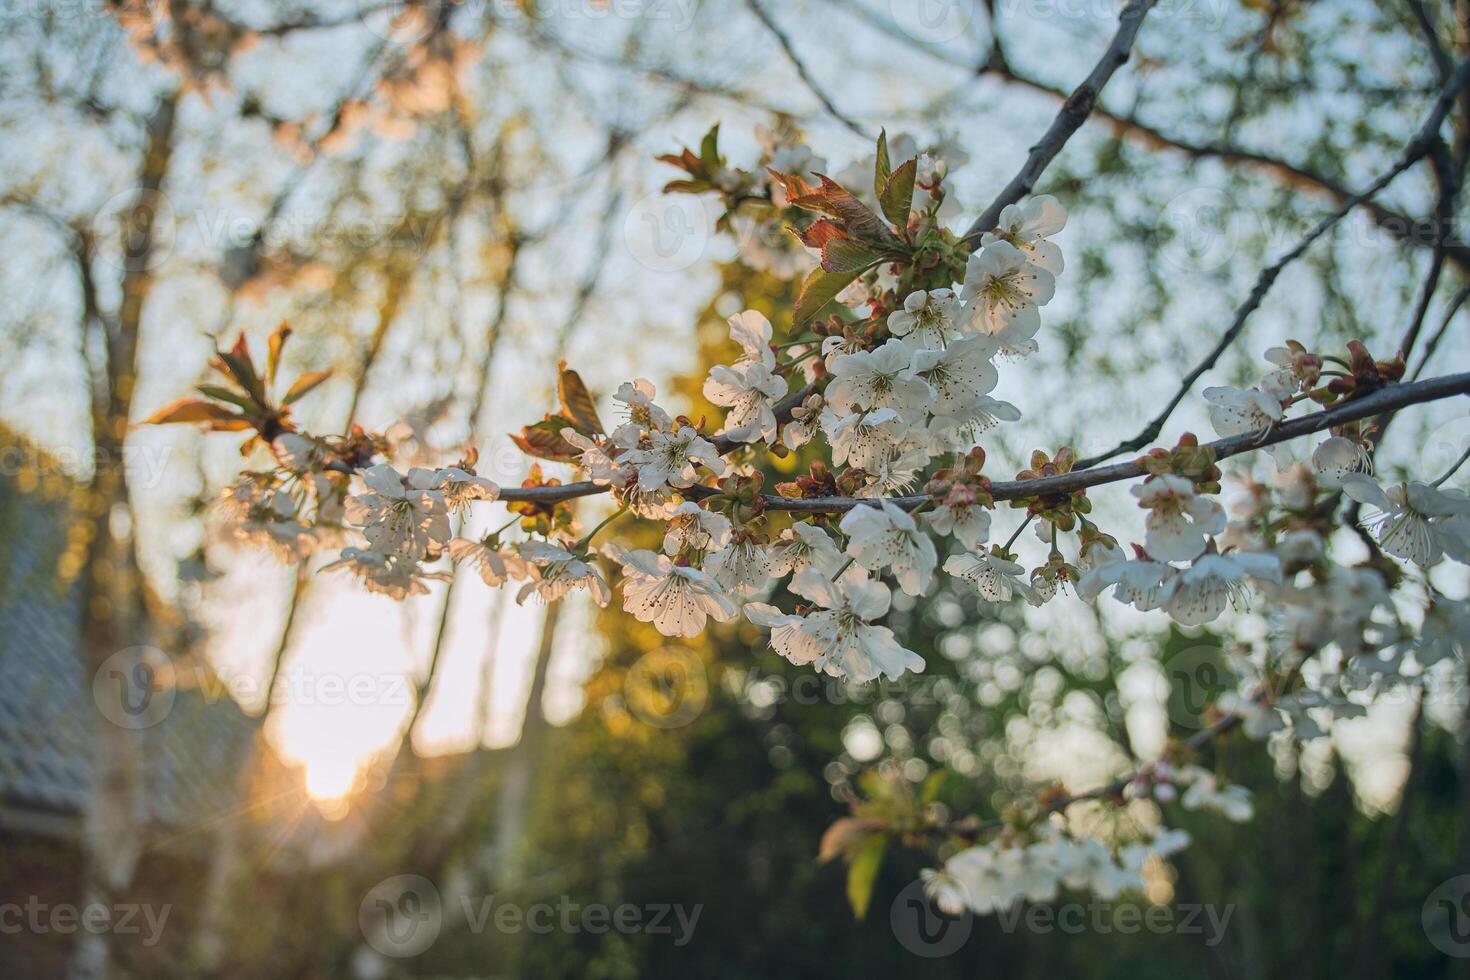 Apple Blossom in warm sunlight shallow depth of field photo